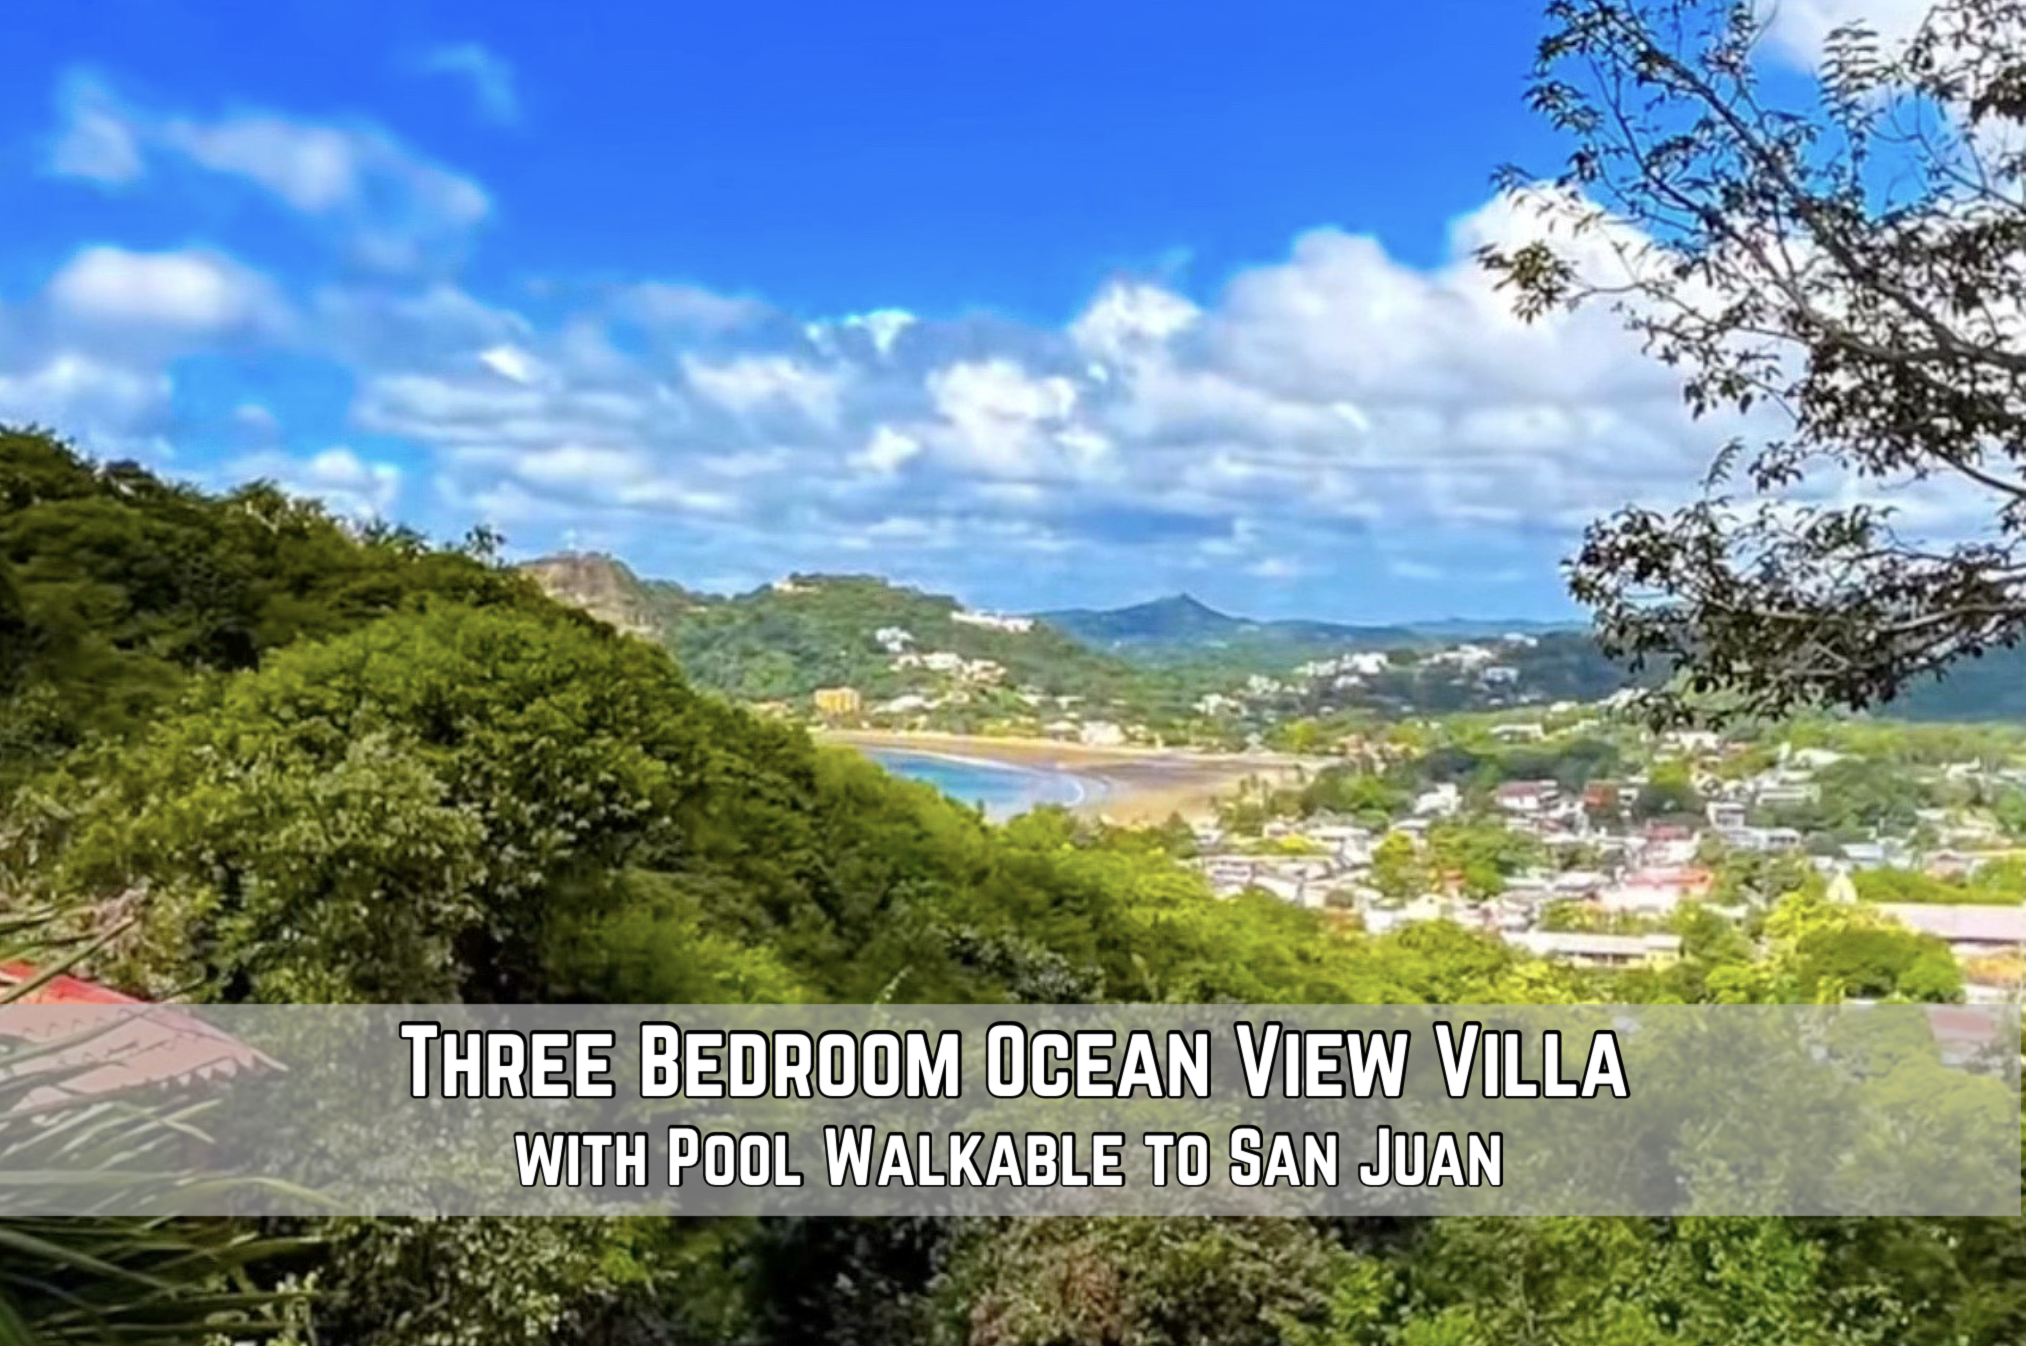 Home House Villa Ocean View Real Estate Property for Sale San Juan Del Sur Nicaragua.png